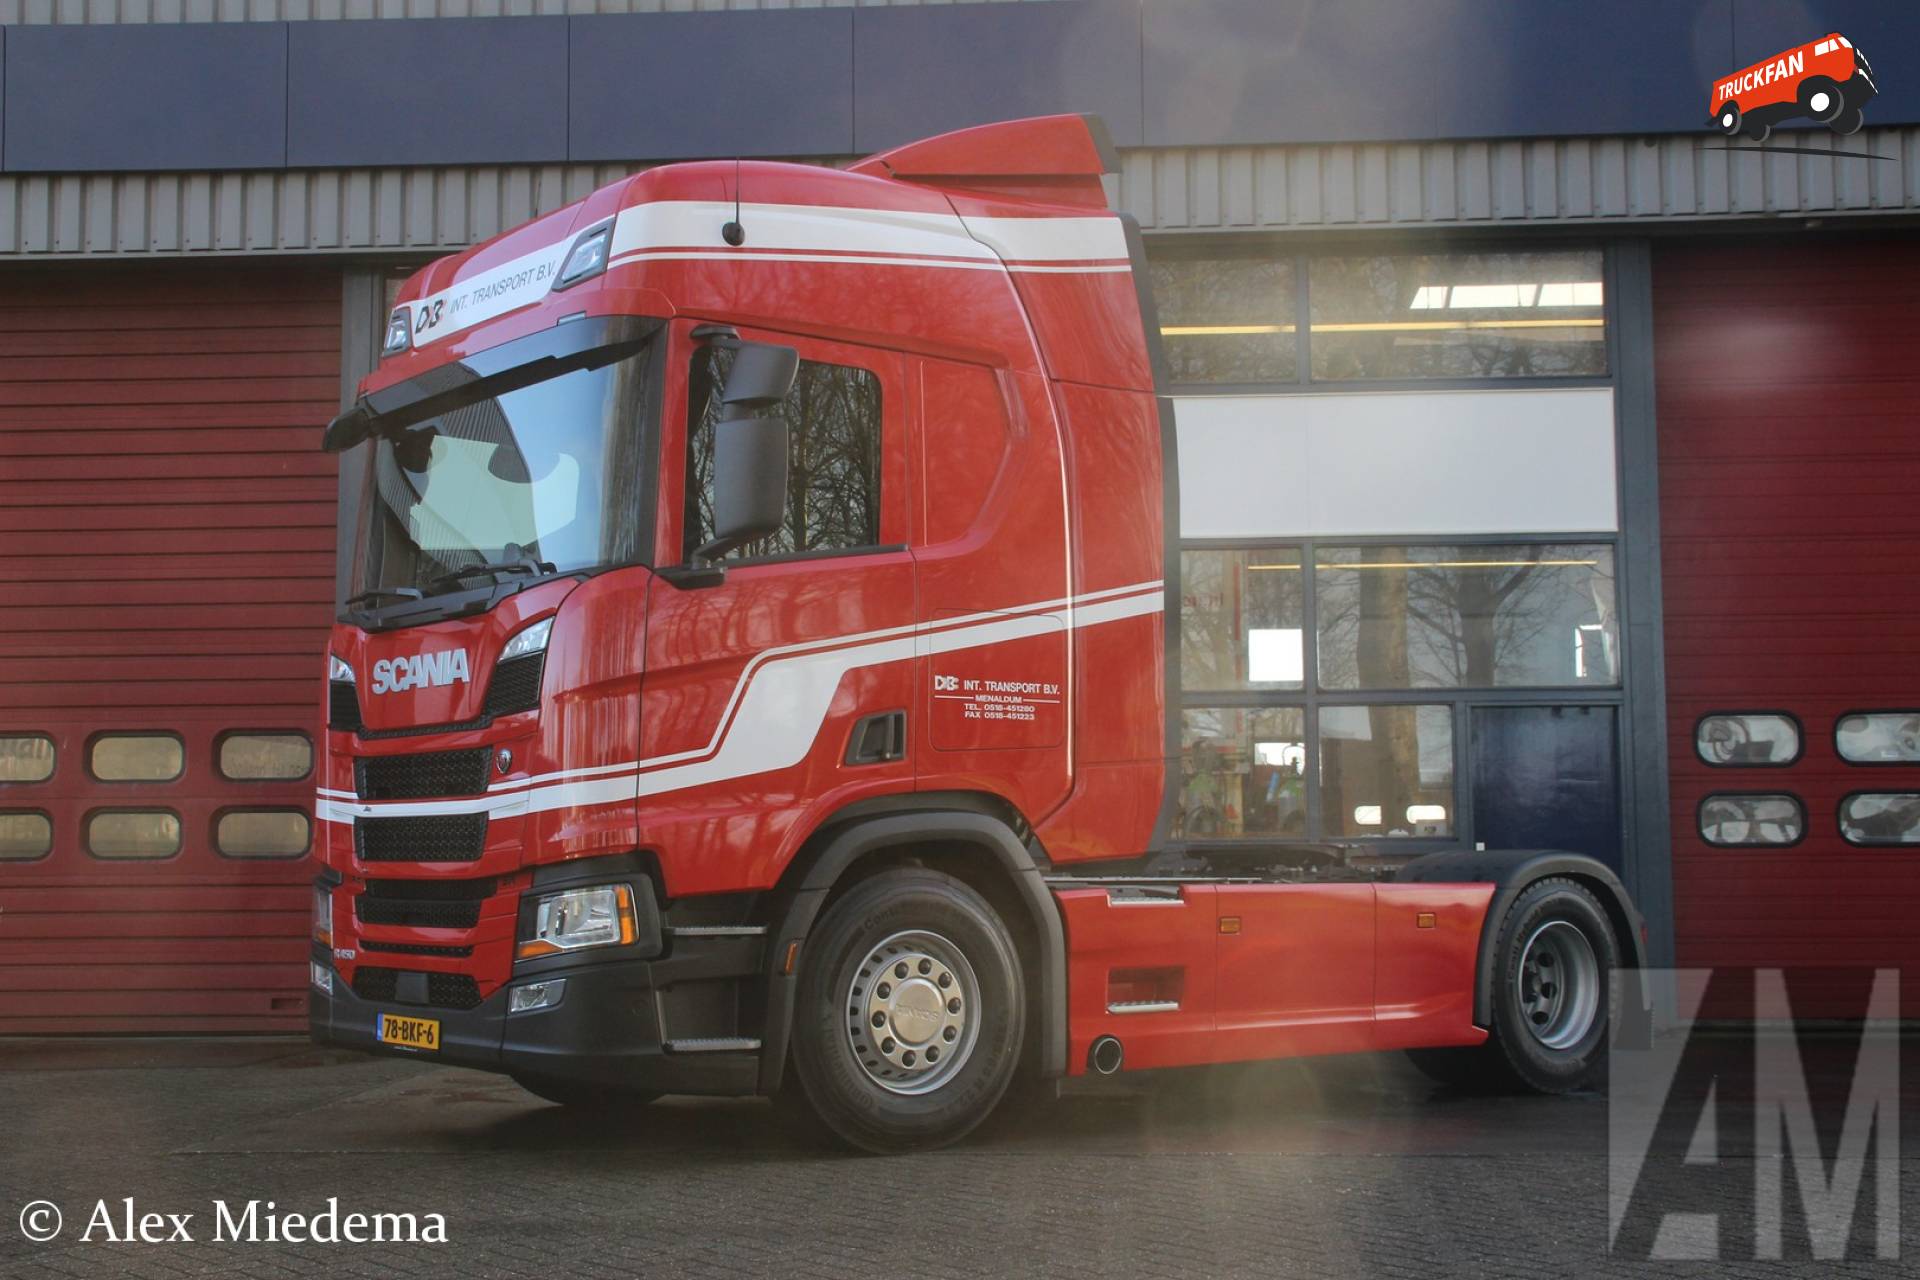 Scania R450 (new)